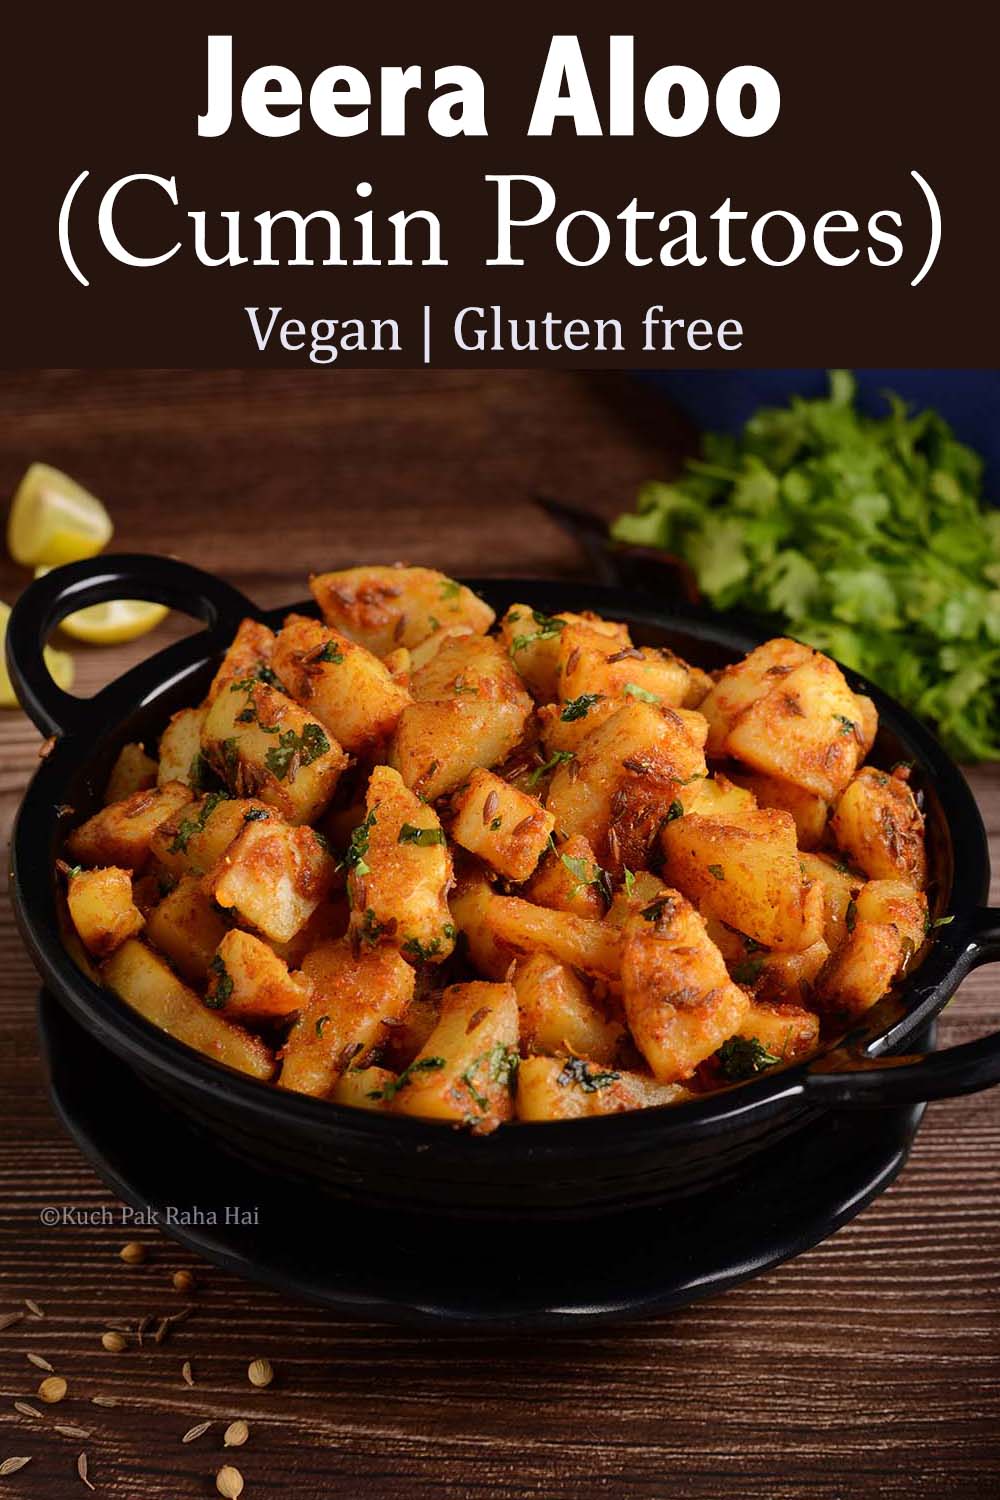 Jeera Aloo or Indian Cumin Potatoes vegan & gluten free side dish.